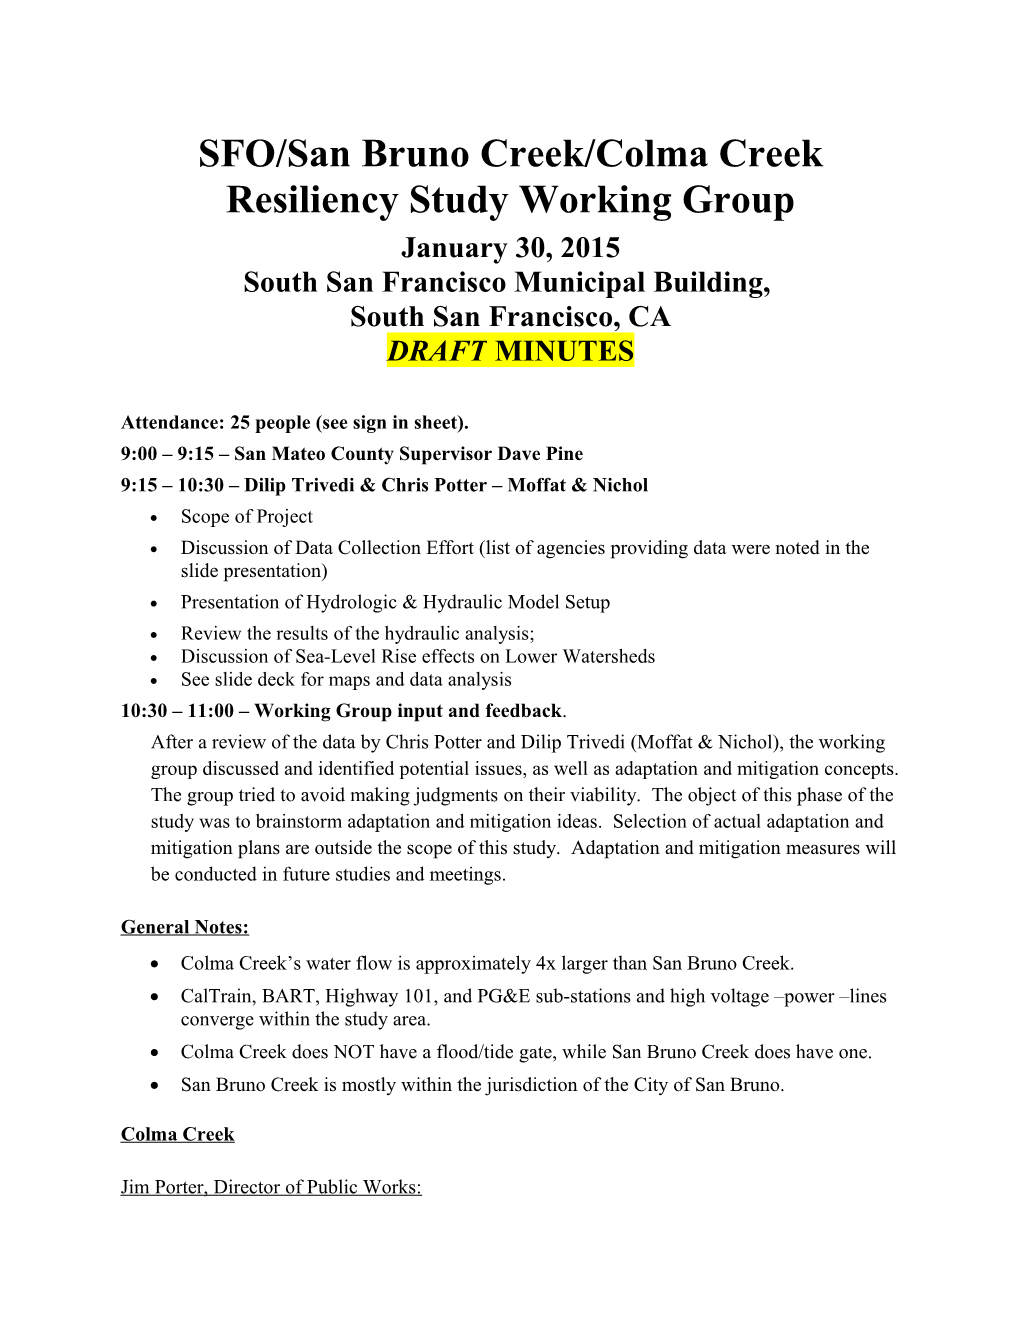 SFO/San Bruno Creek/Colma Creek Resiliency Study Working Group